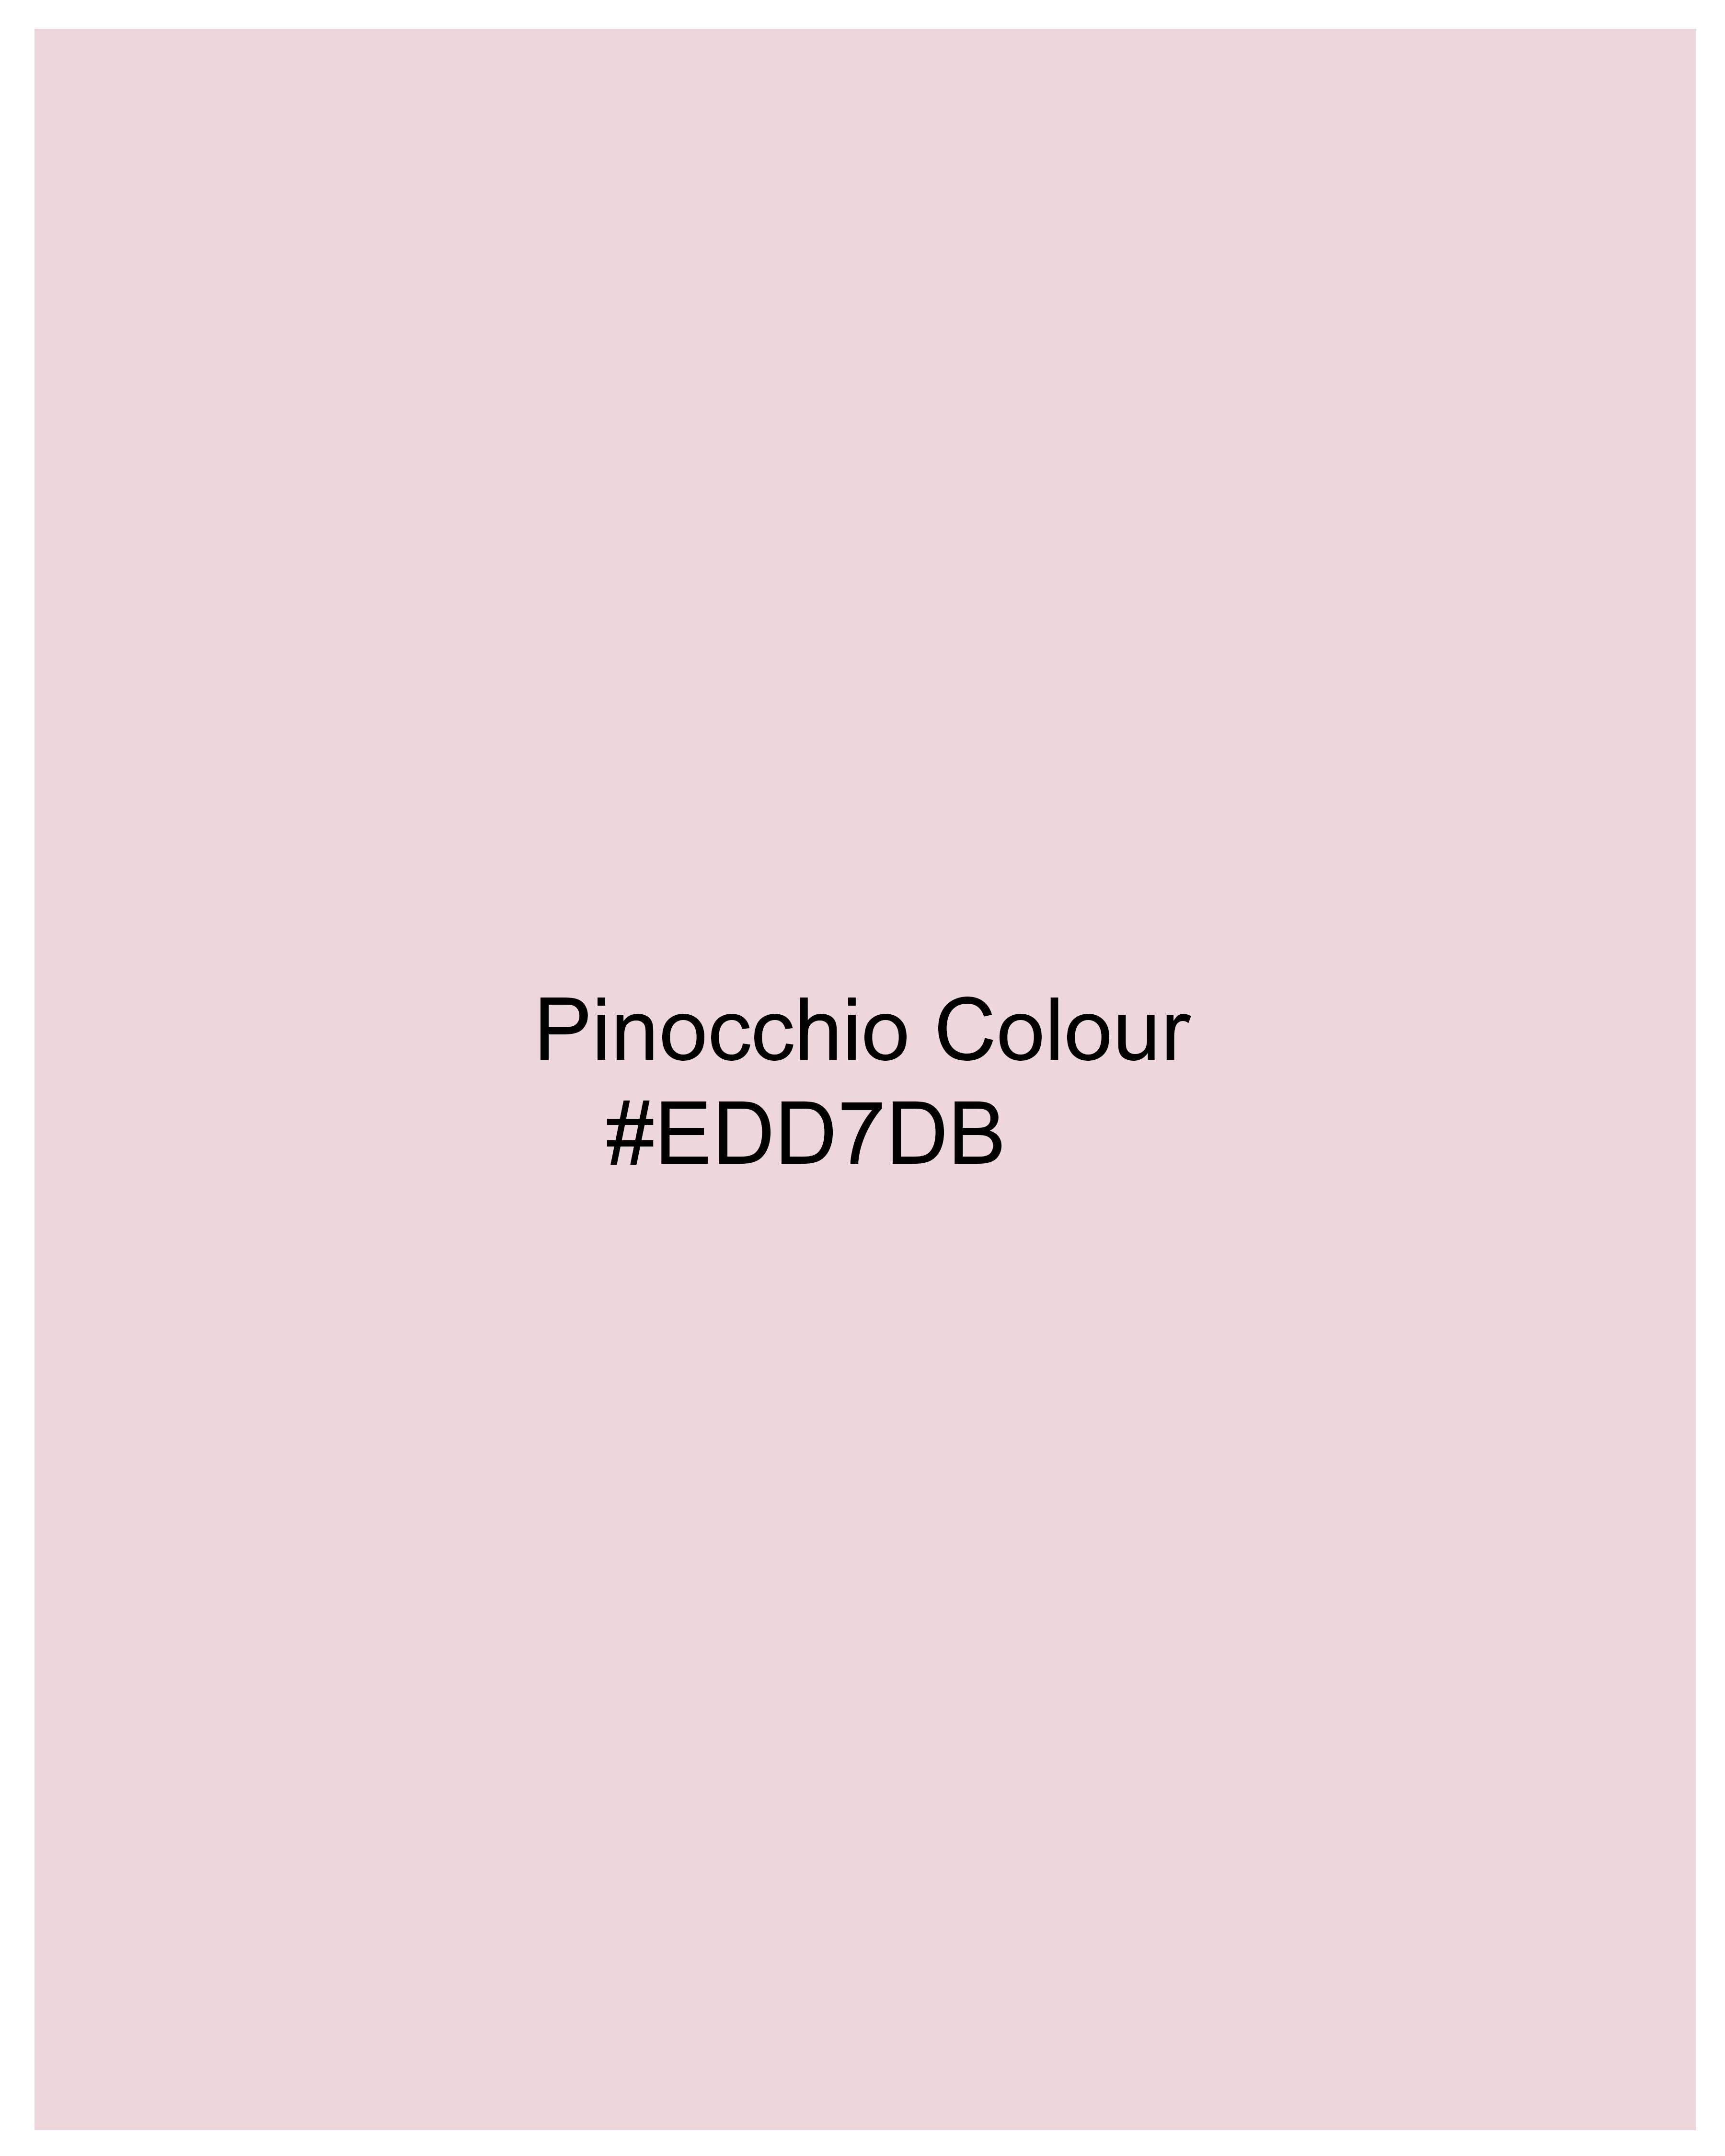 Pinocchio Pink Super Soft Premium Cotton Shirt 8877-BLK-38, 8877-BLK-H-38,  8877-BLK-39,  8877-BLK-H-39,  8877-BLK-40,  8877-BLK-H-40,  8877-BLK-42,  8877-BLK-H-42,  8877-BLK-44,  8877-BLK-H-44,  8877-BLK-46,  8877-BLK-H-46,  8877-BLK-48,  8877-BLK-H-48,  8877-BLK-50,  8877-BLK-H-50,  8877-BLK-52,  8877-BLK-H-52